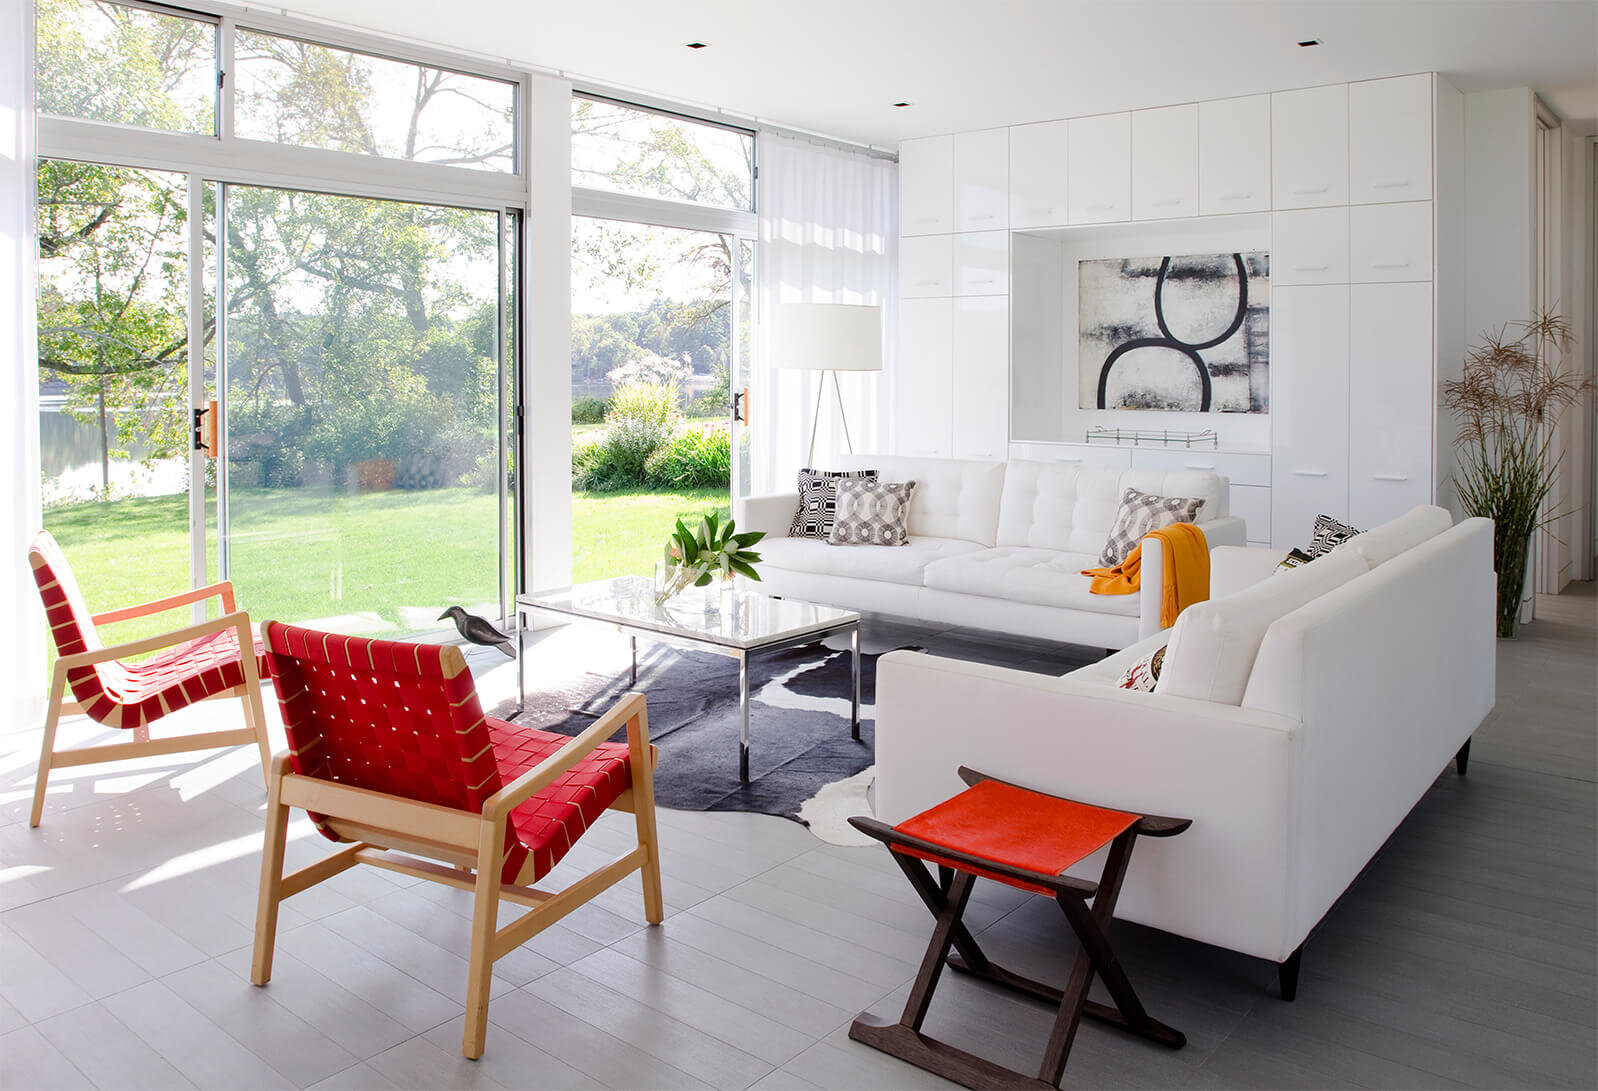 Interior mid century modern living room with orange chairs.